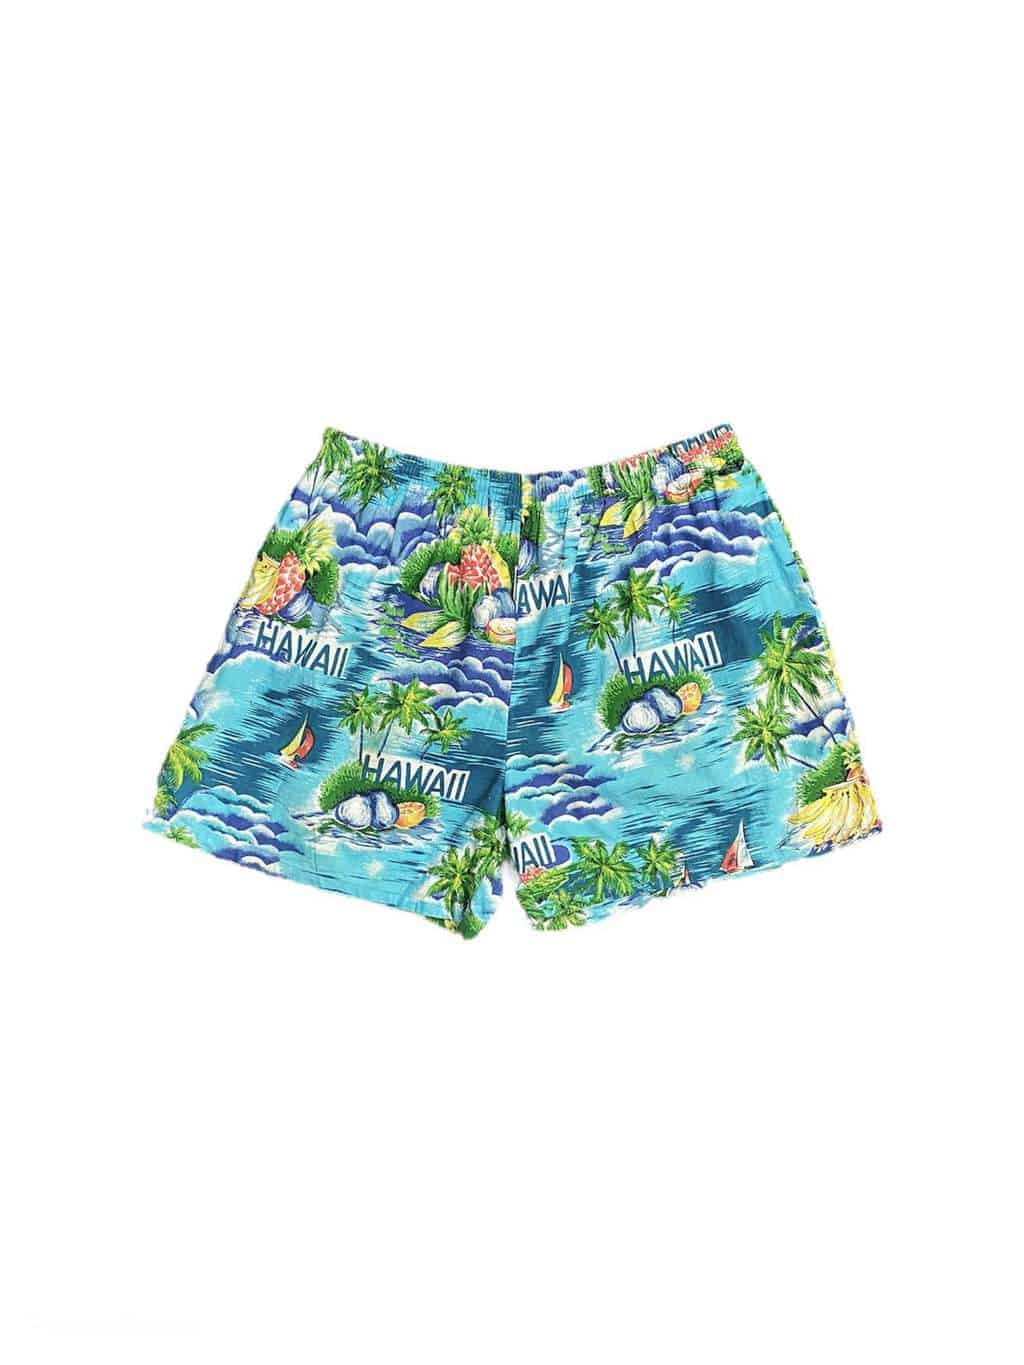 90s Vintage Hawiian Surf Shorts Palm Trees Blue Green - S / M - St Cyr ...